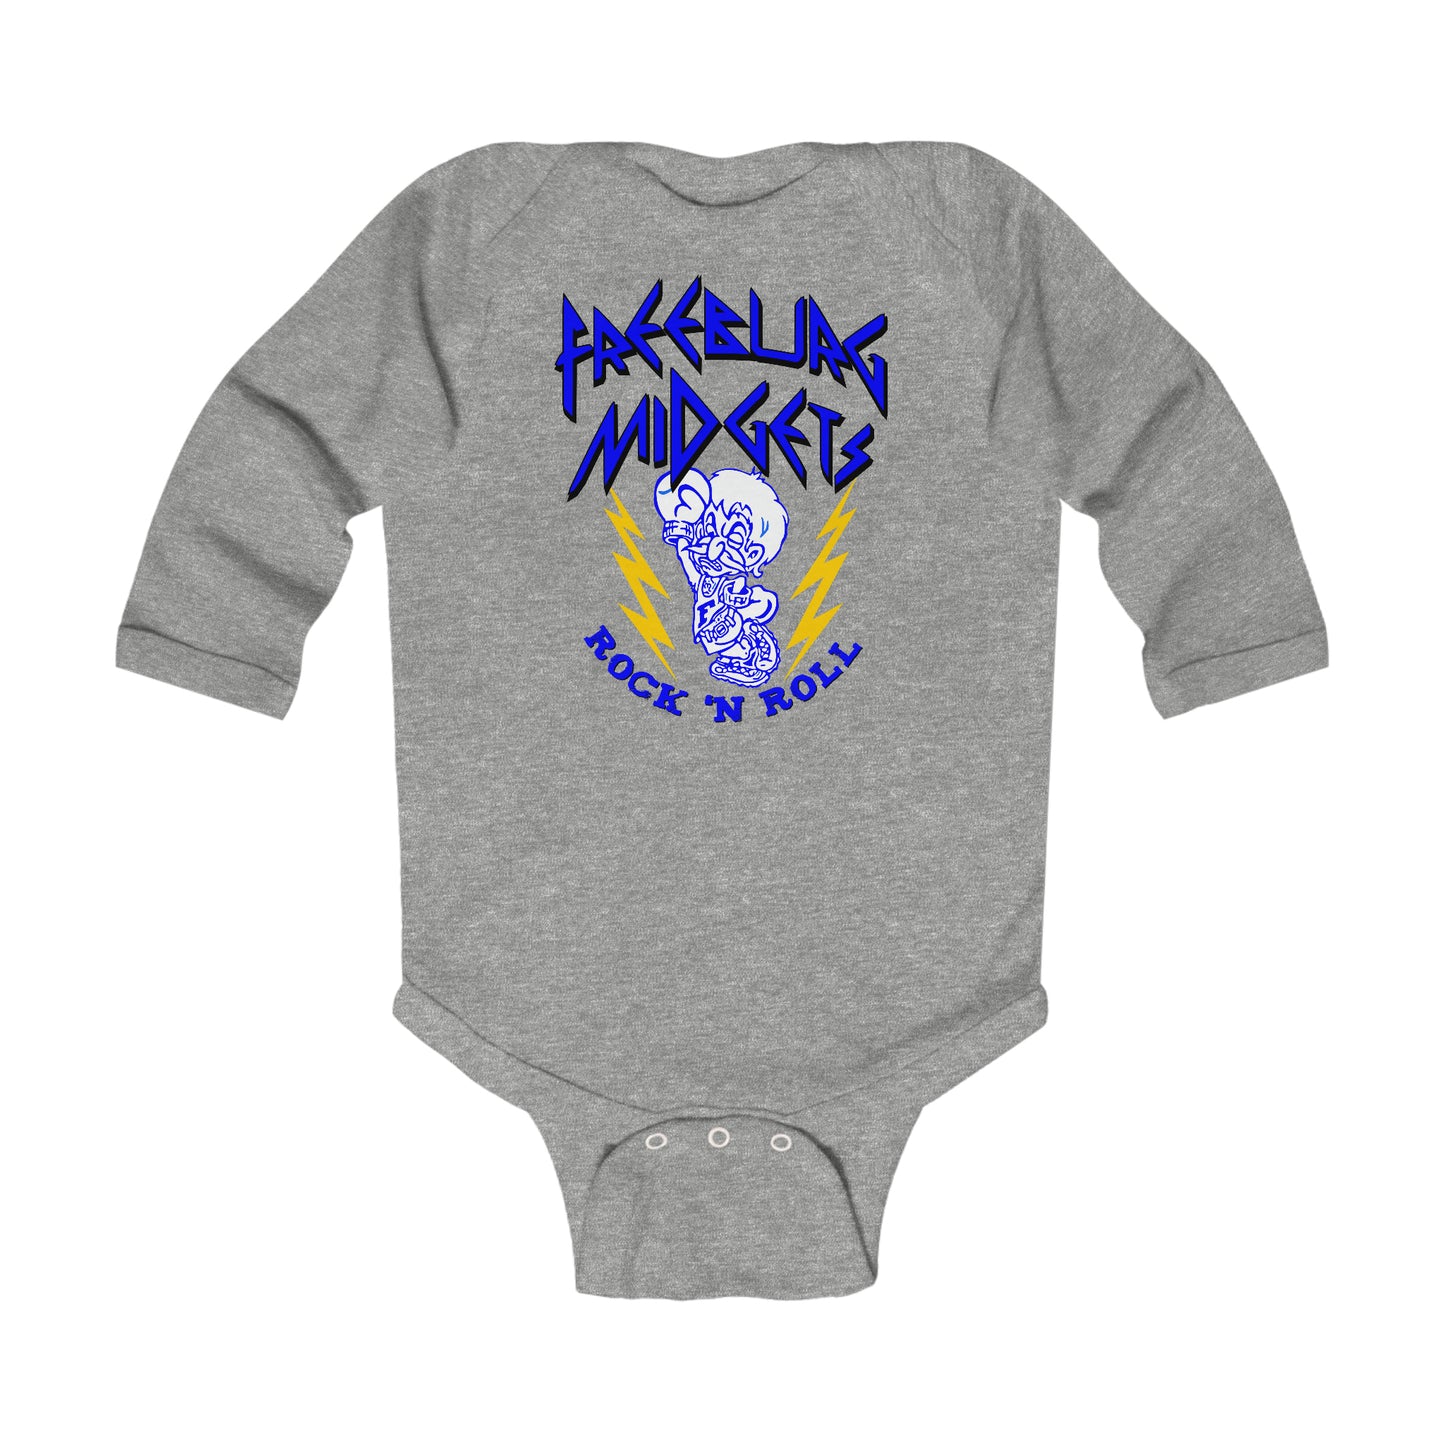 Freeburg Midget Rock and Roll Infant Long Sleeve Bodysuit